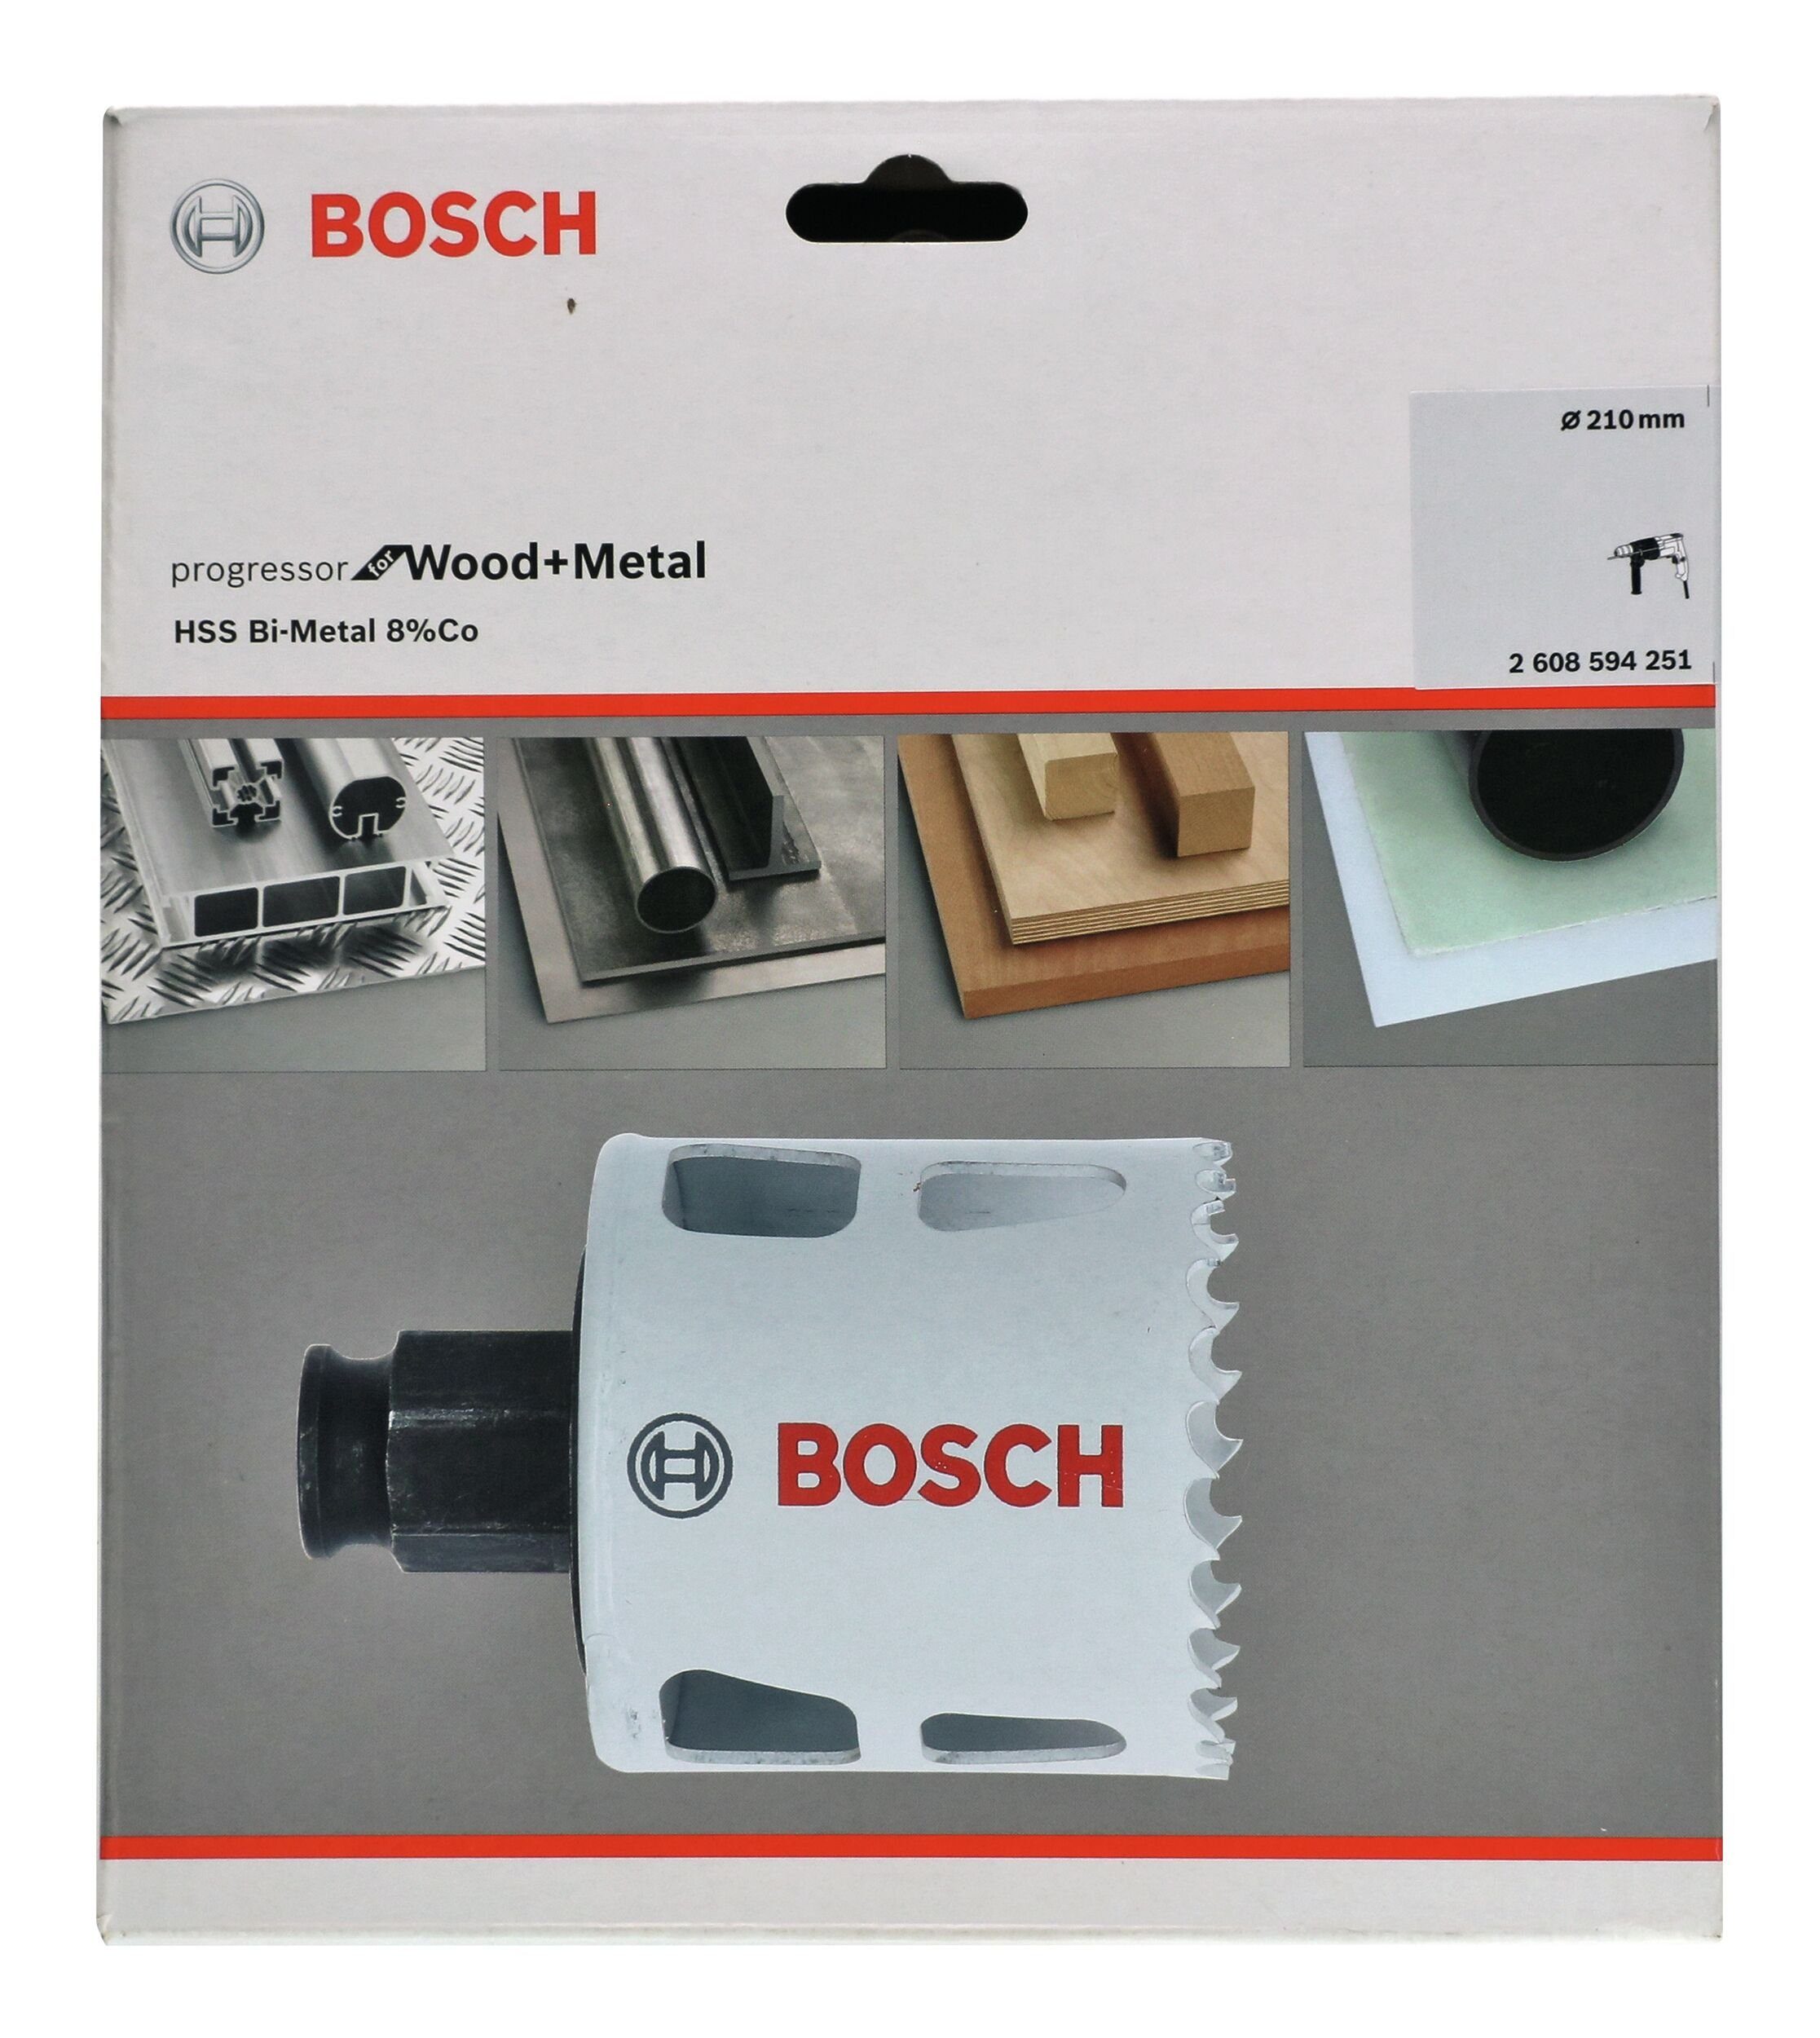 BOSCH and Ø Lochsäge, 210 Metal Wood mm, Progressor for